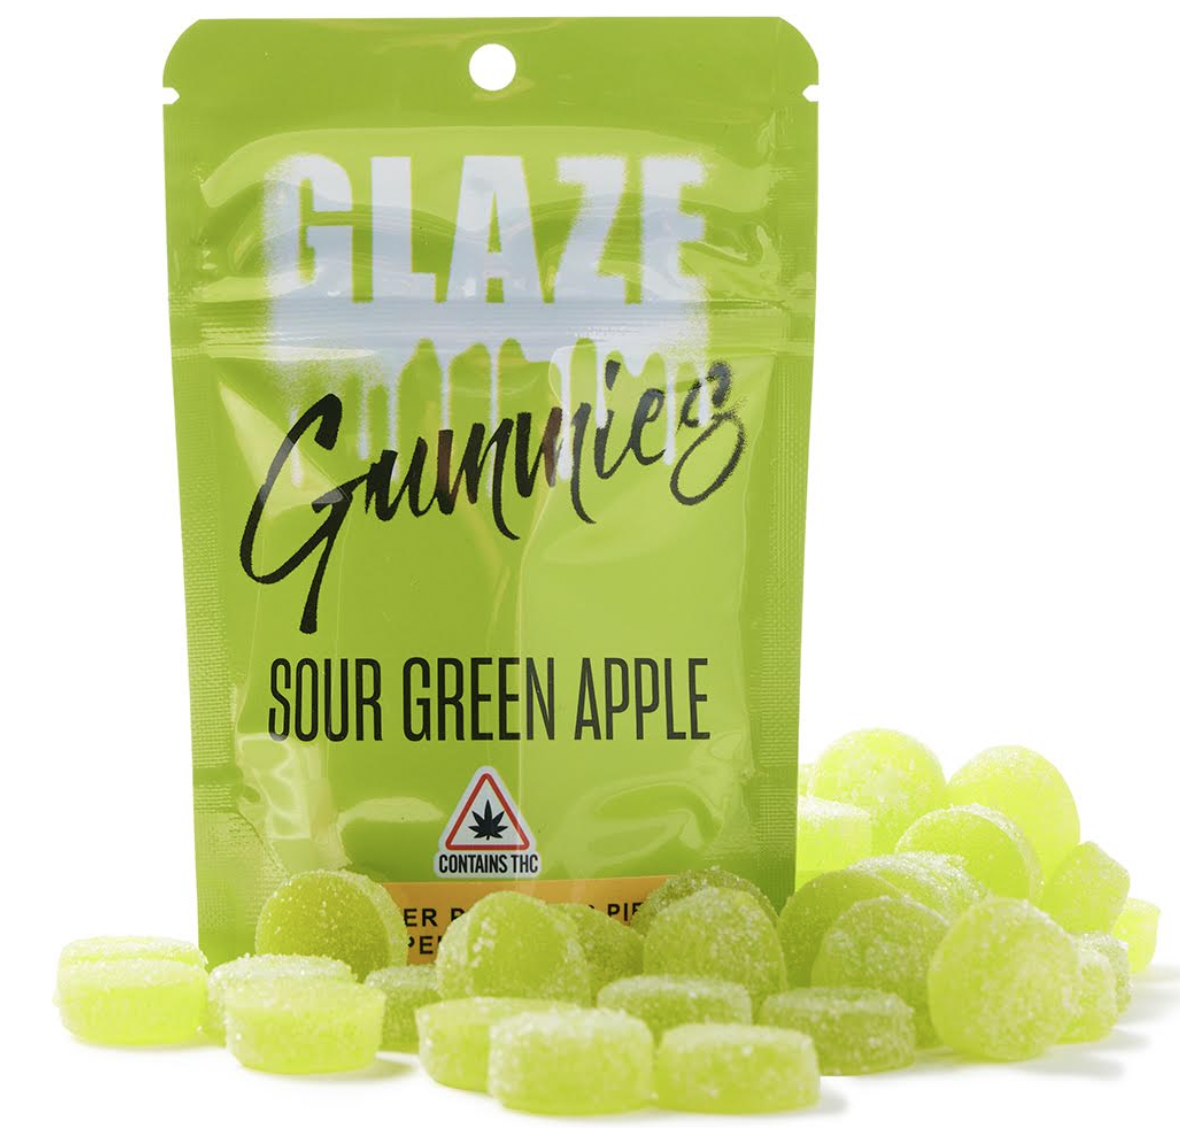 Glaze Sour Green Apple Gummies